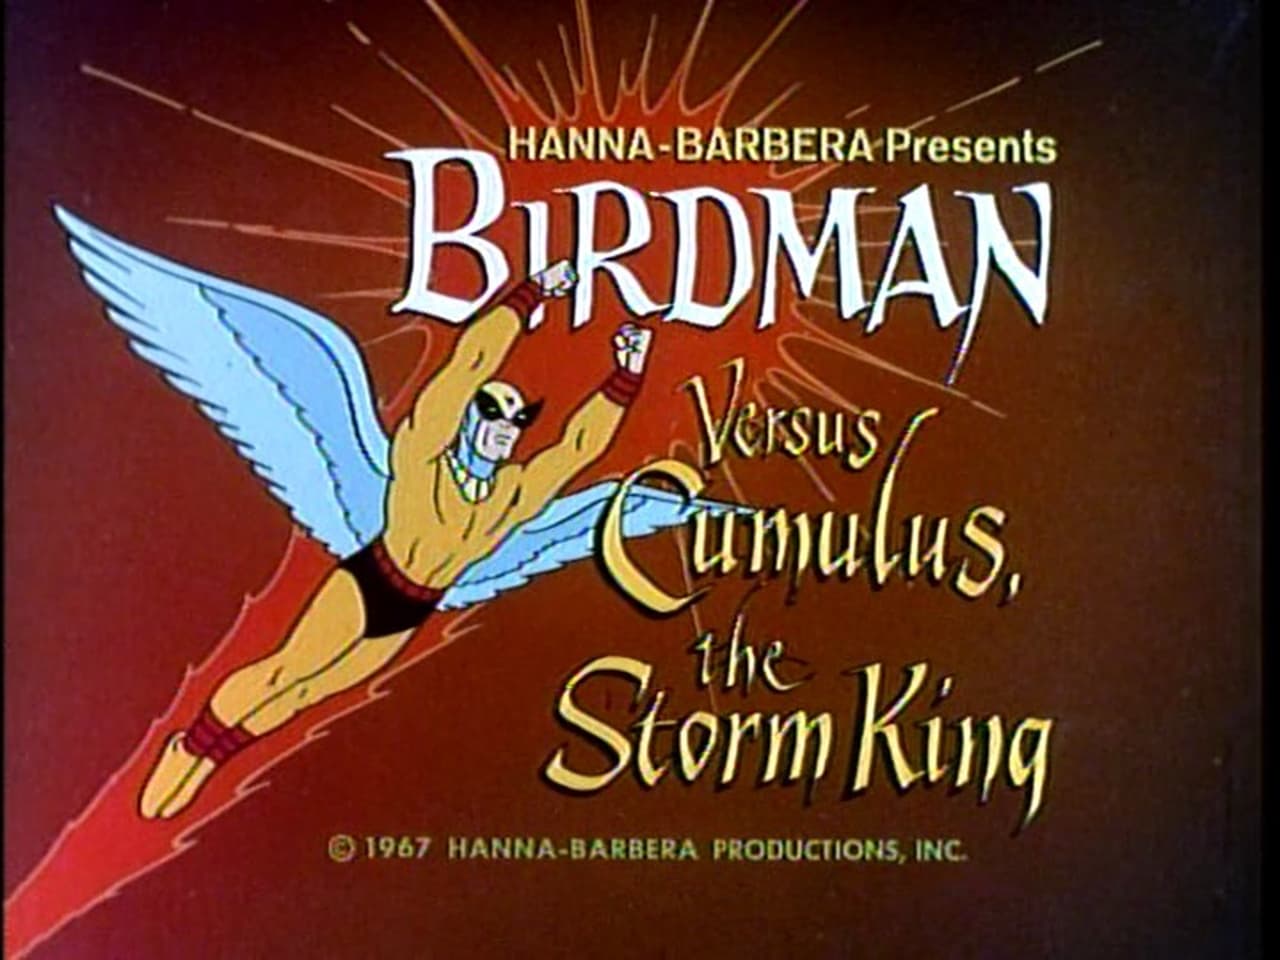 Birdman Versus Cumulus the Storm King